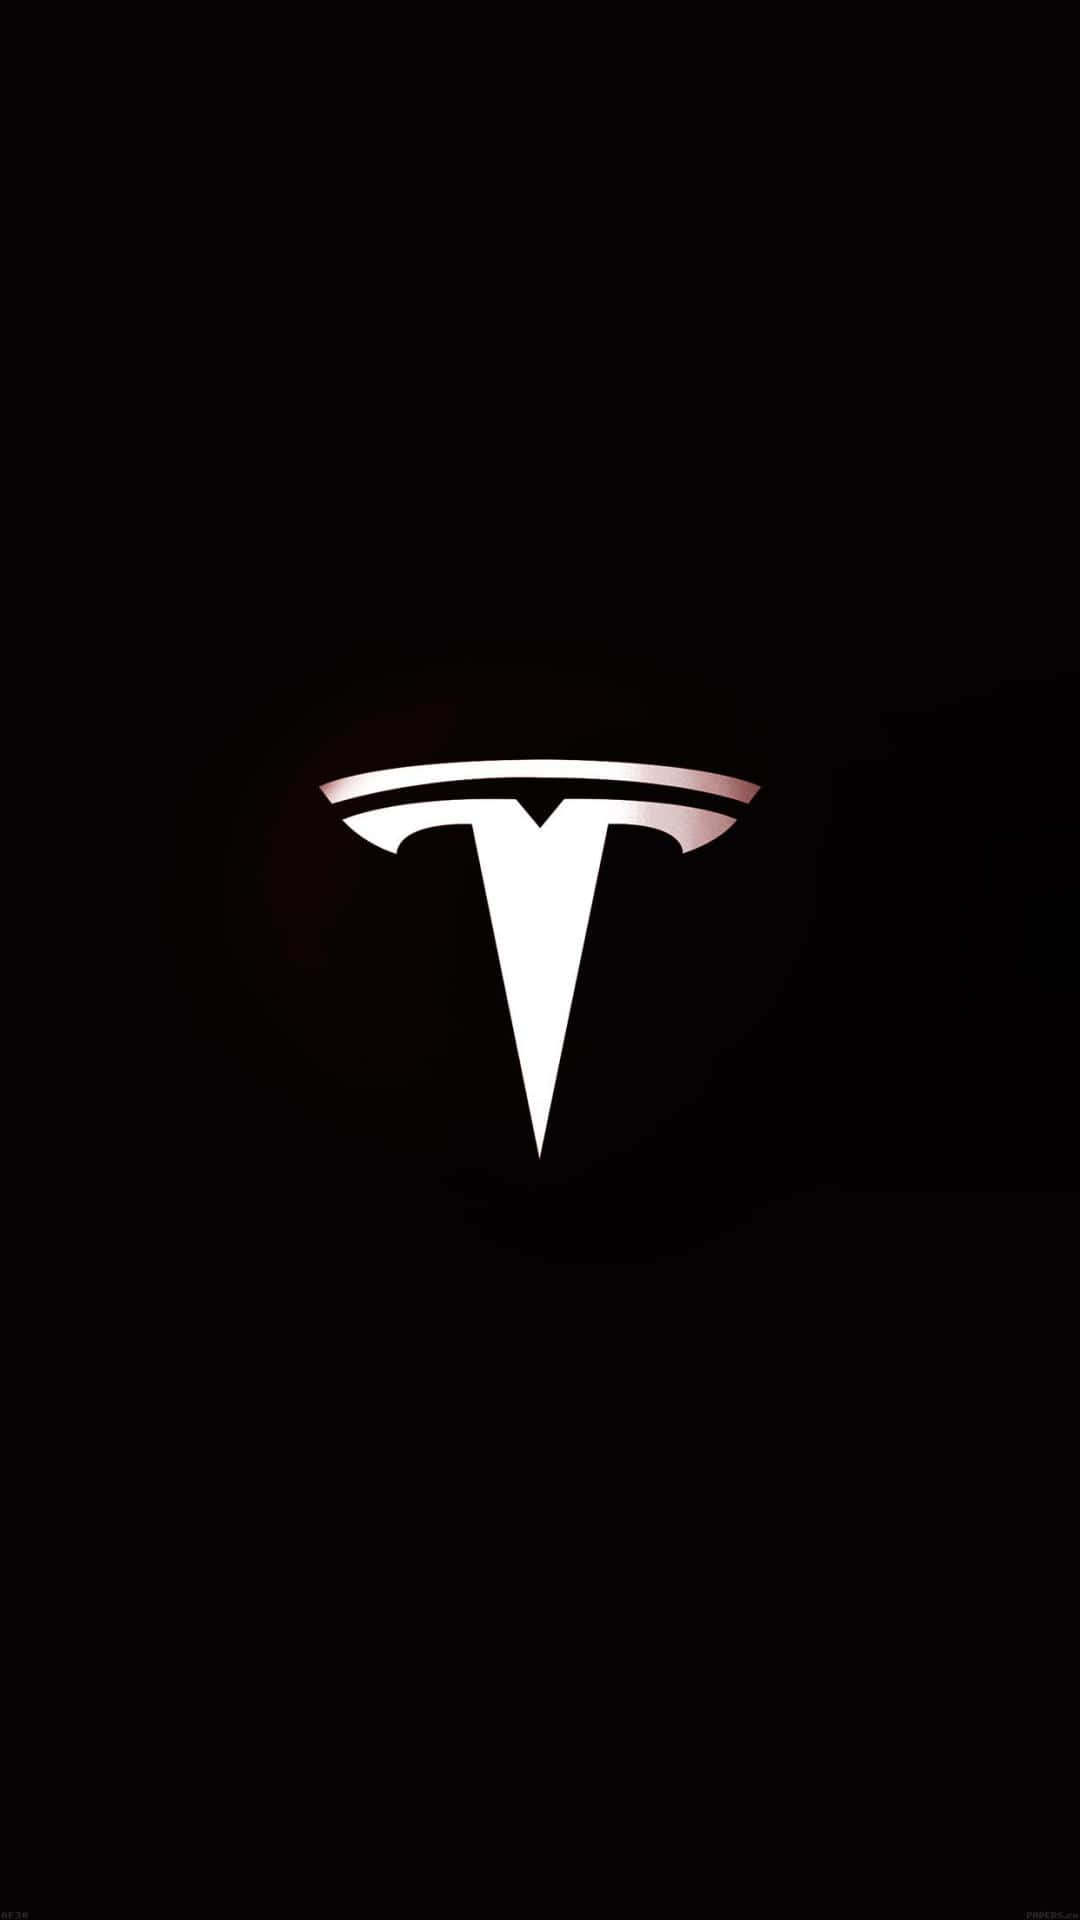 Bright Tesla Logo Against a Dark Background Wallpaper